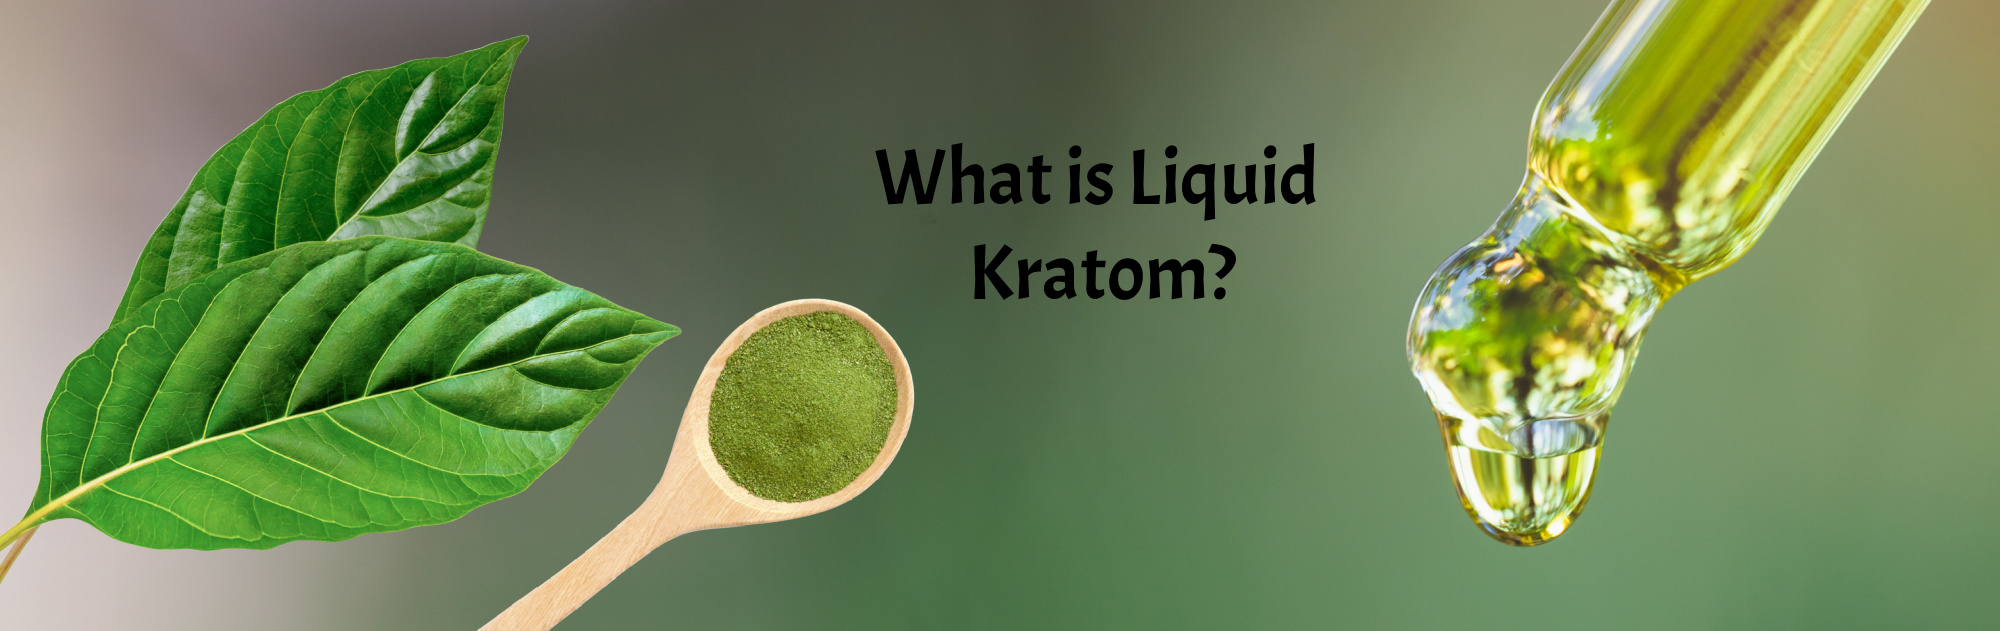 image of what is liquid kratom